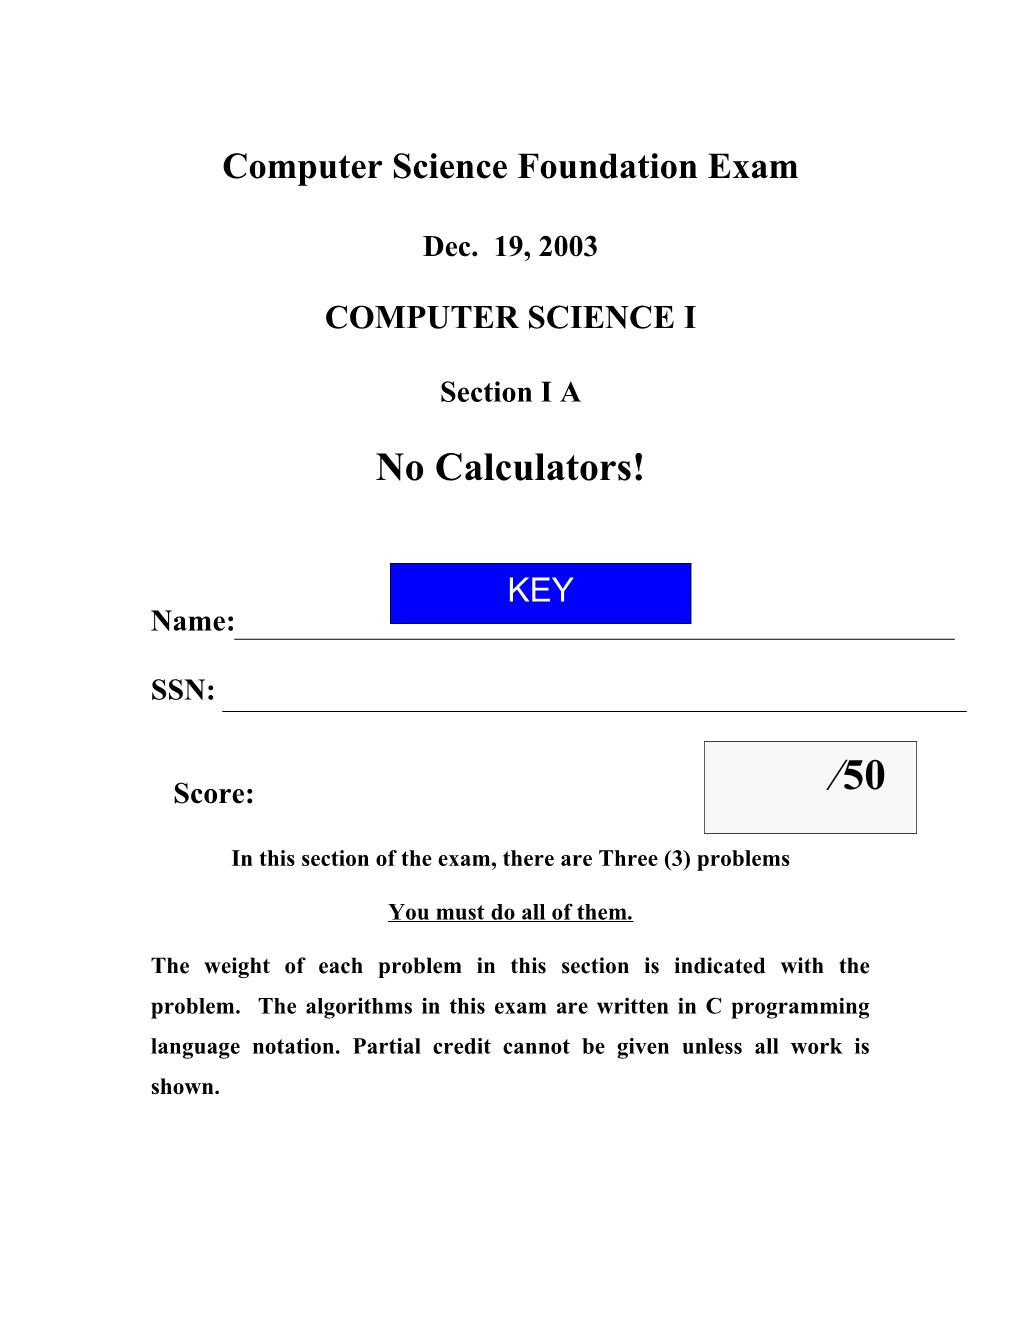 Computer Science Foundation Exam s1